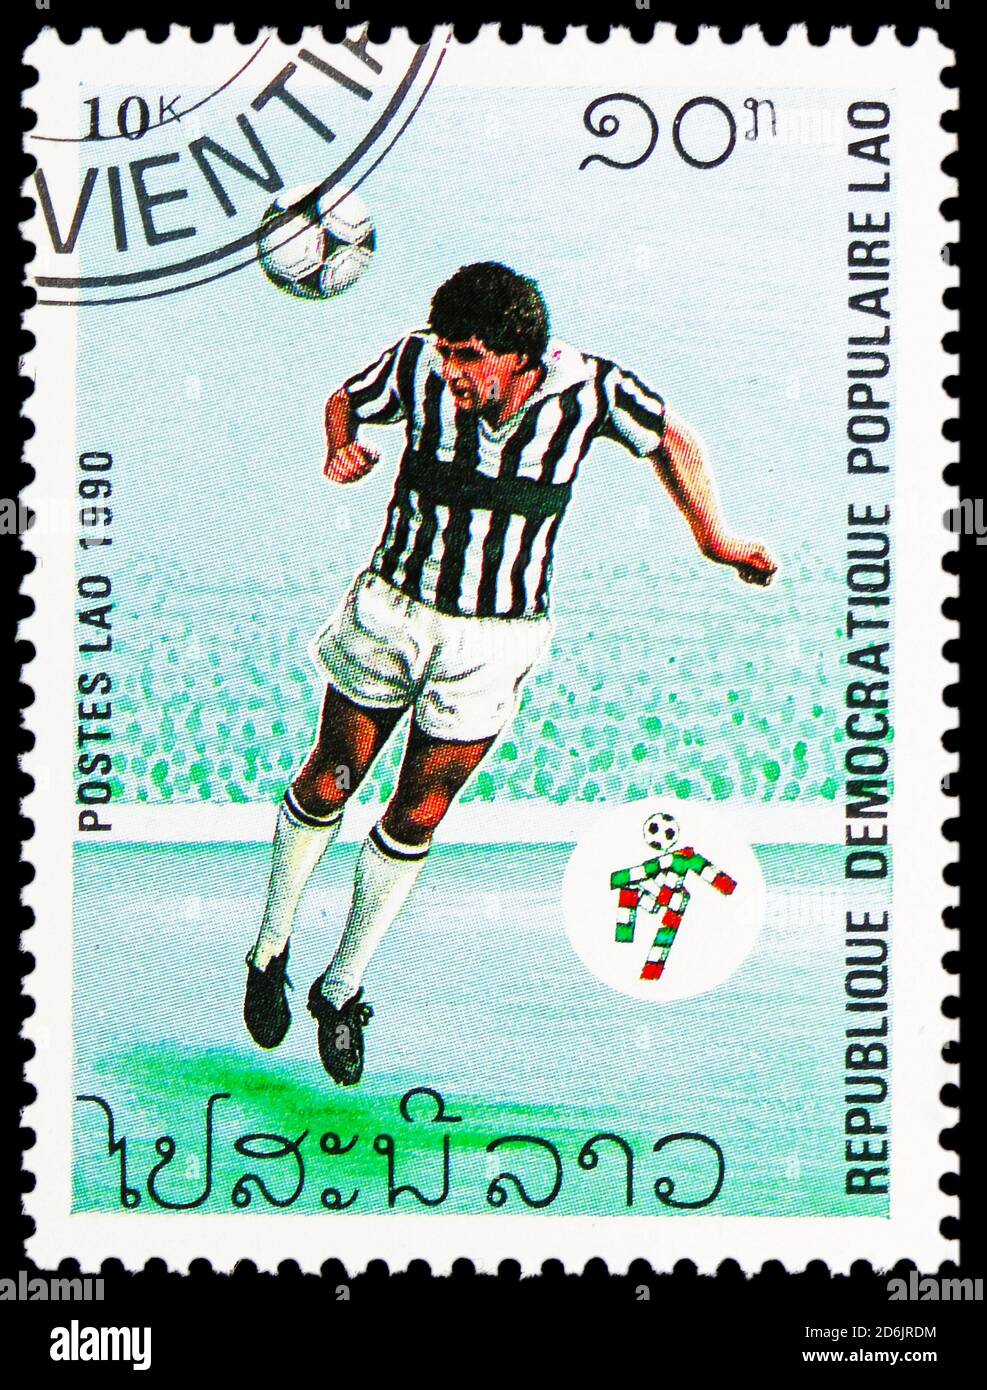 MOSKAU, RUSSLAND - 10. SEPTEMBER 2020: Briefmarke gedruckt in Laos zeigt Spielszenen, FIFA Fußball-Weltmeisterschaft 1990, Italien Serie, um 19 Stockfoto